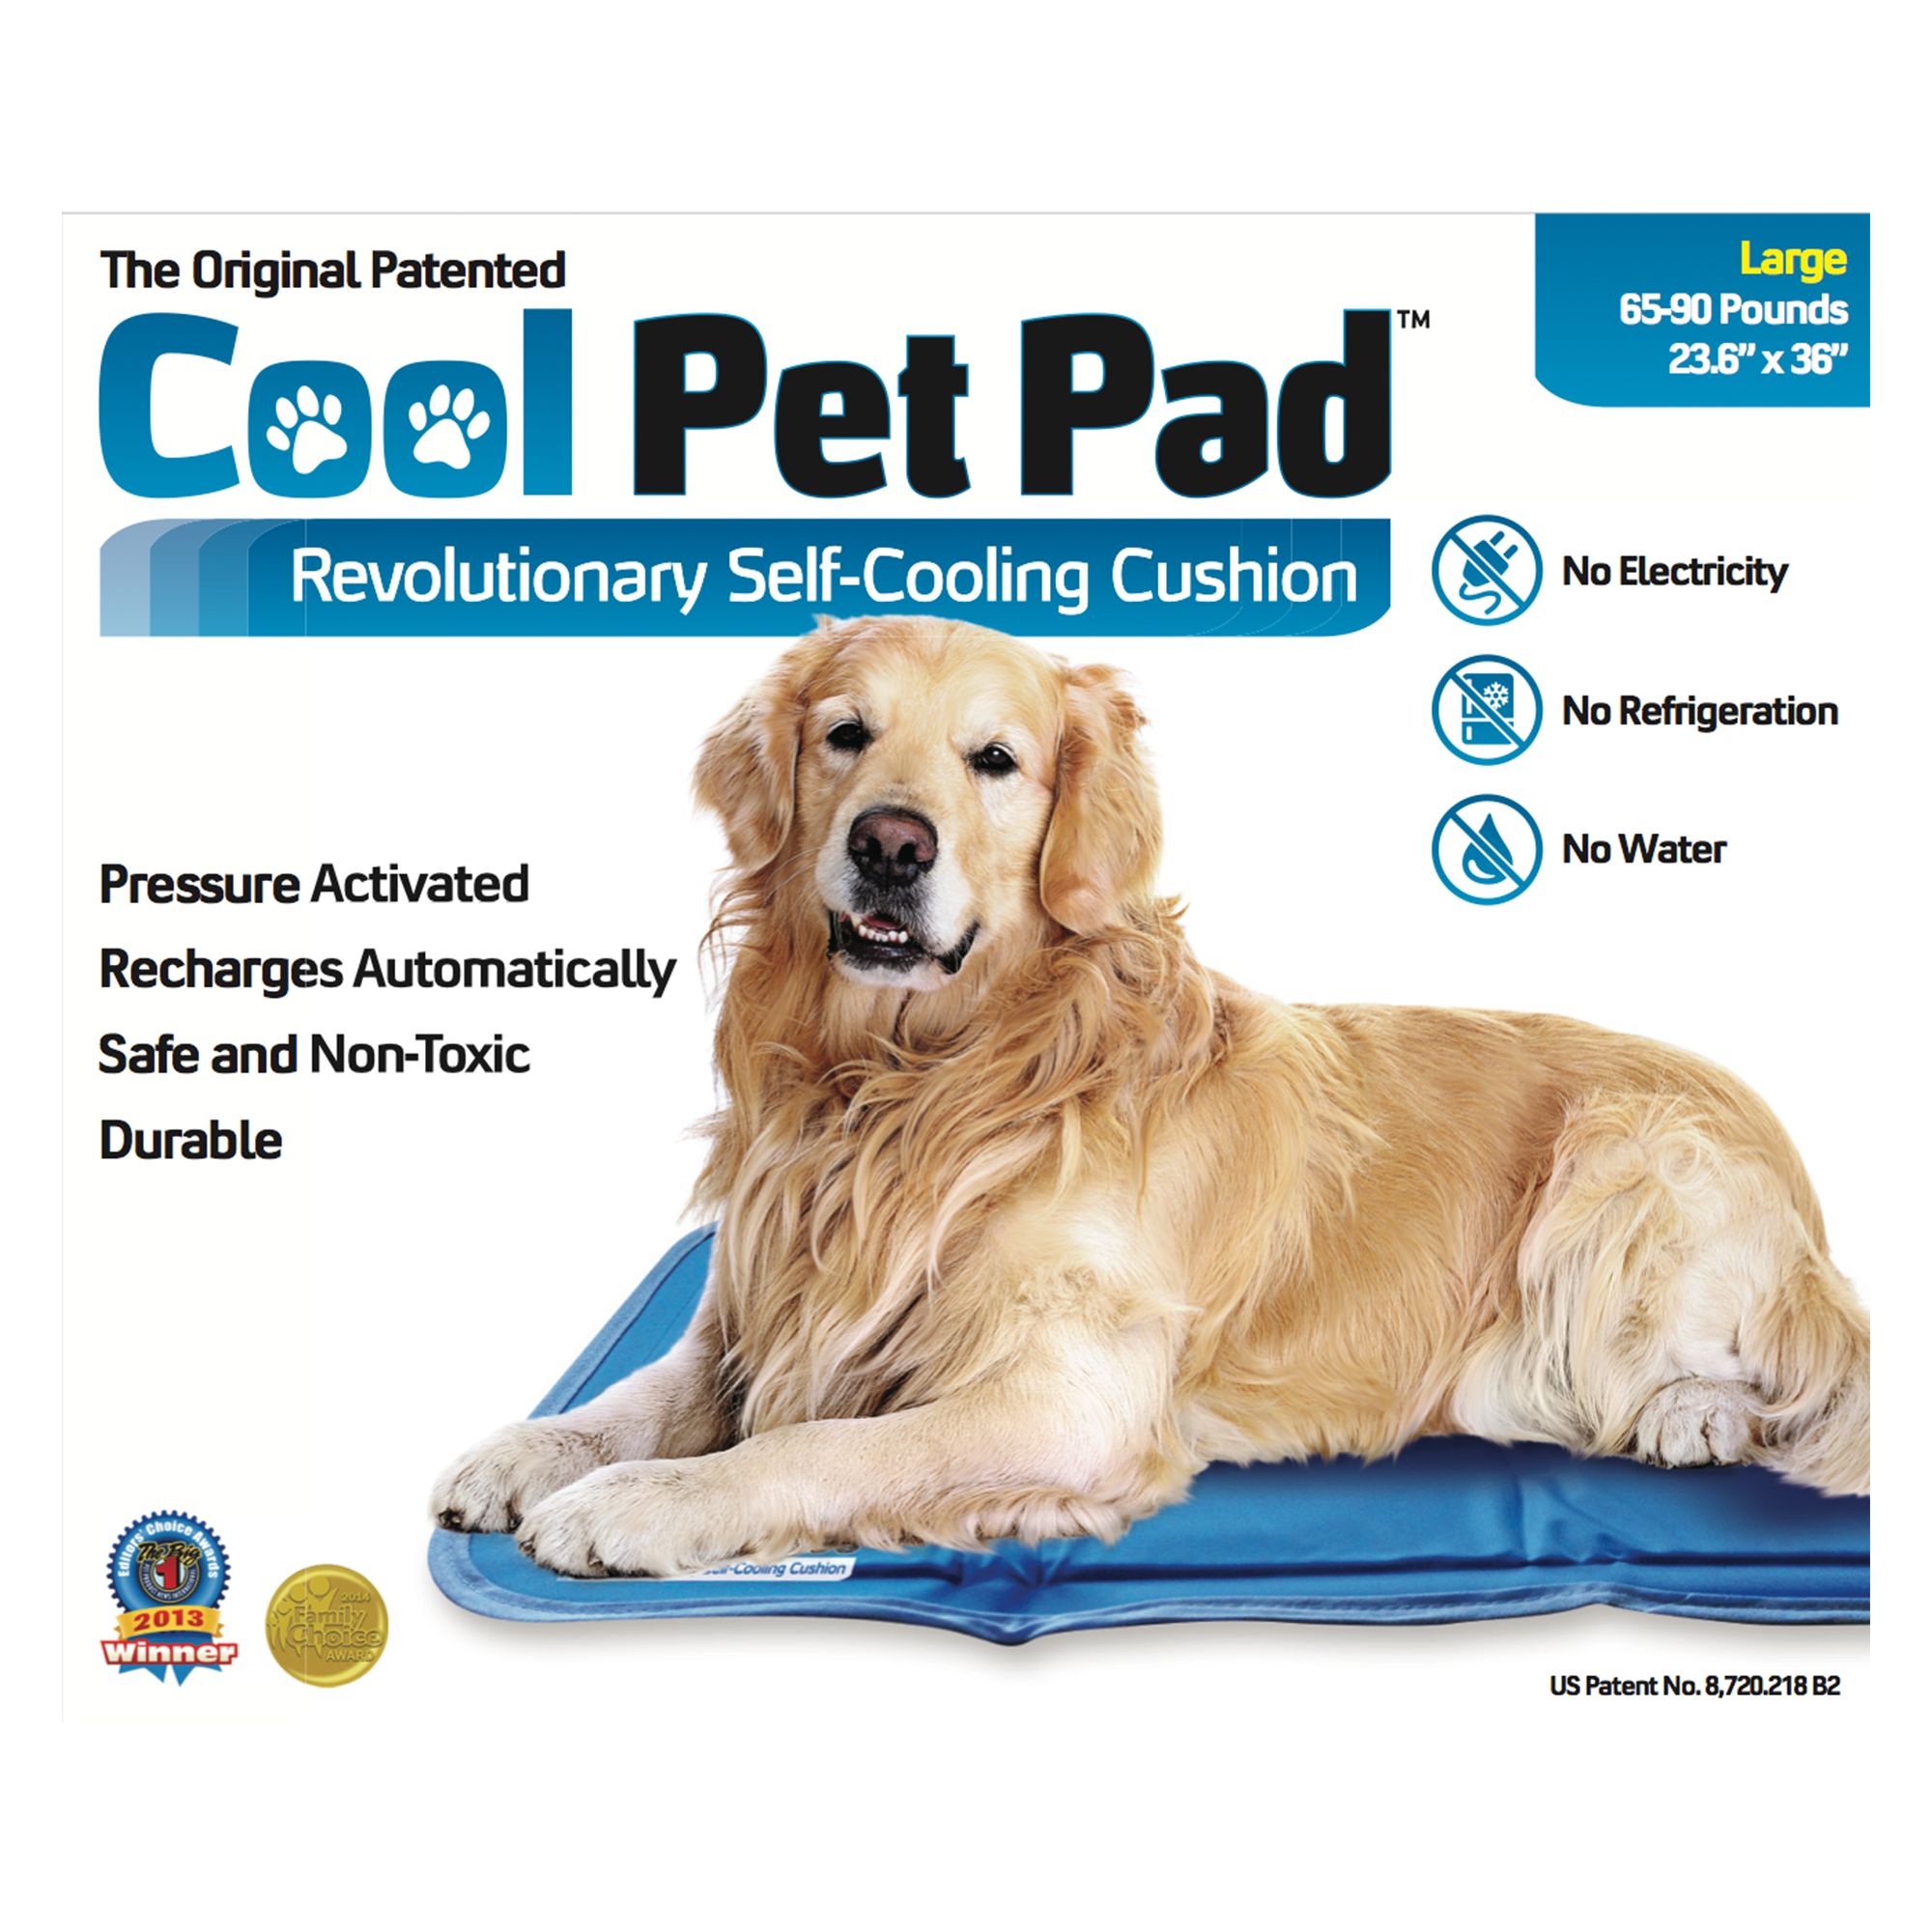 dog cooling mat canada